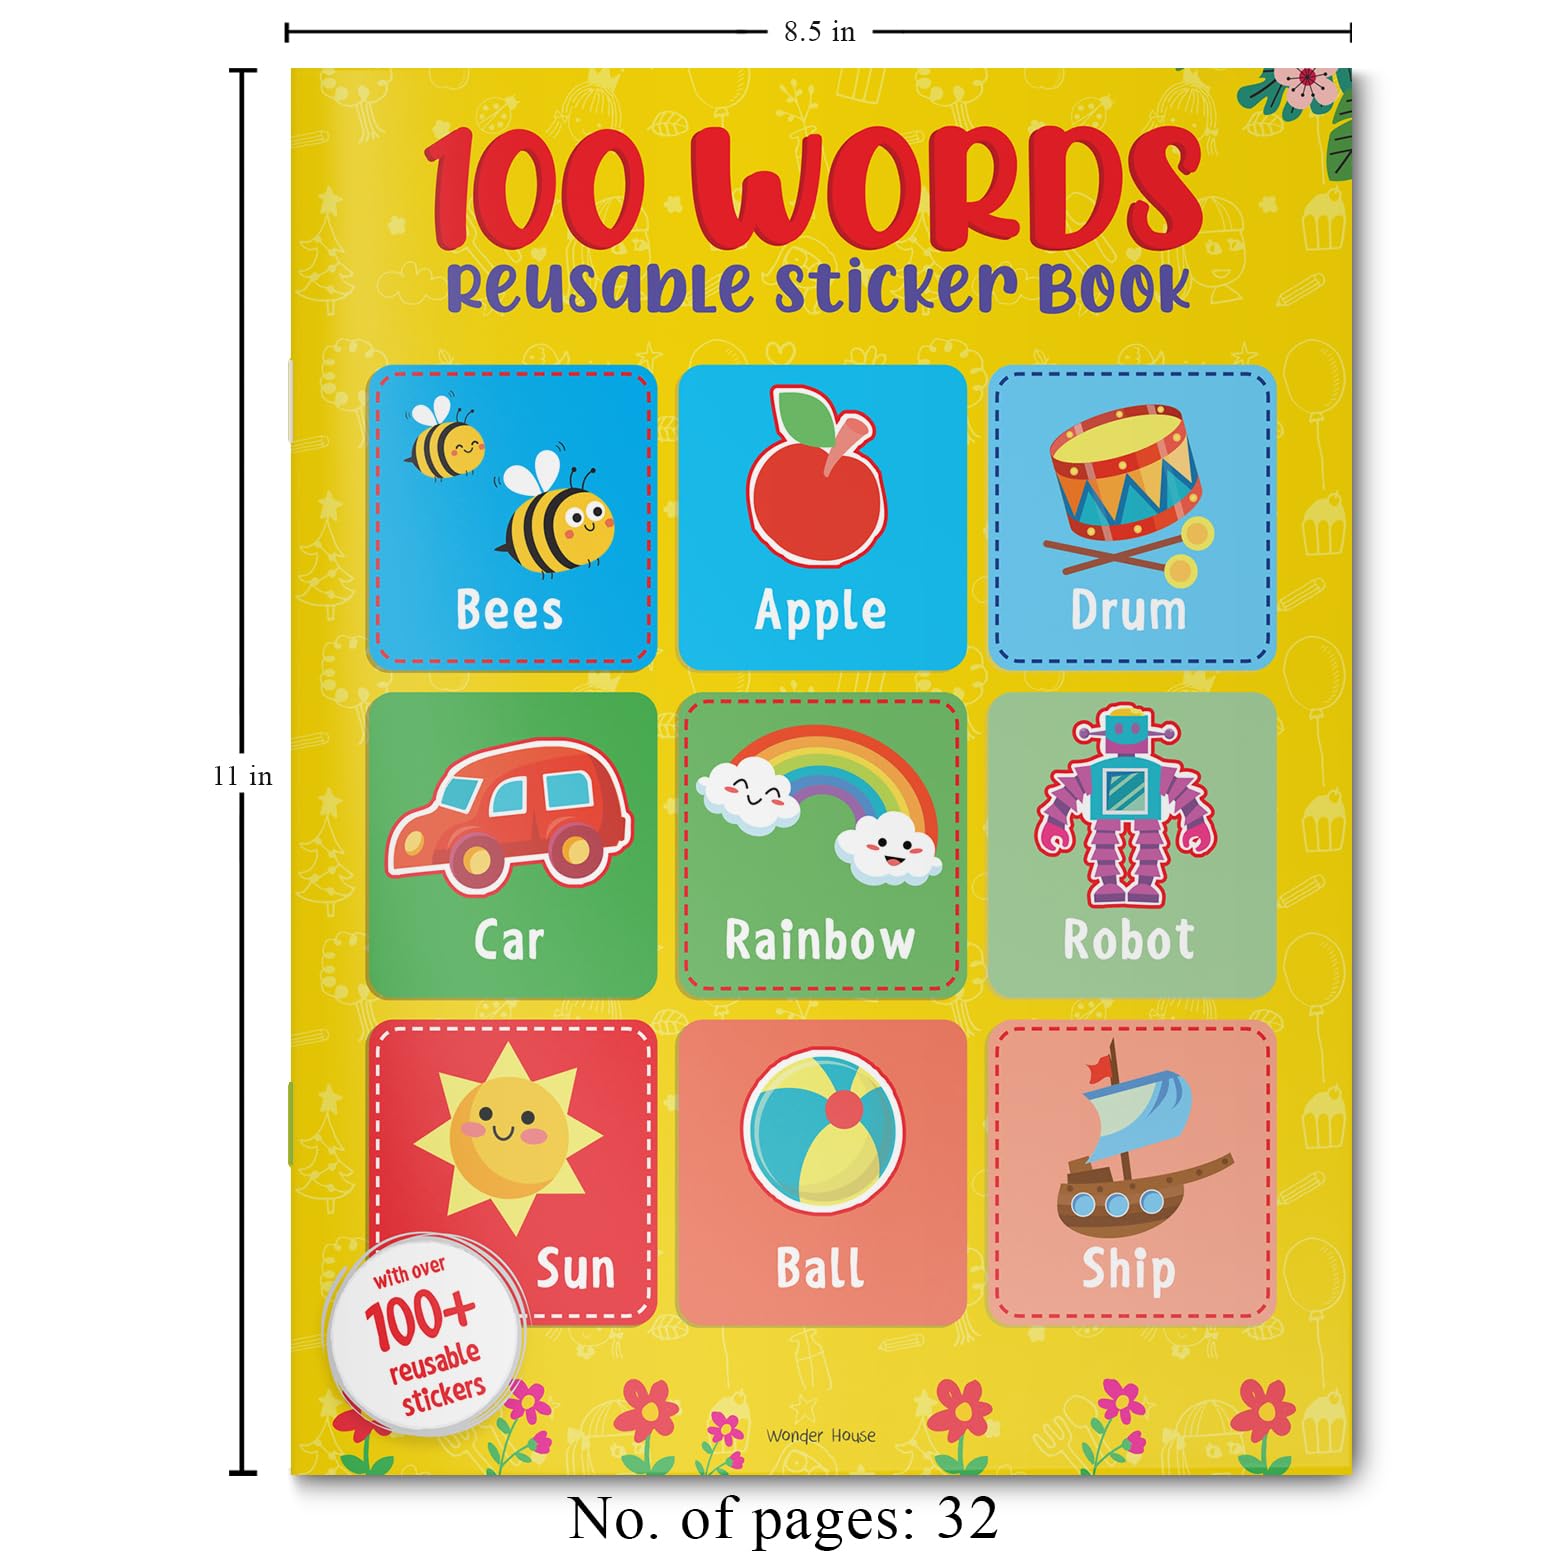 100 Words: Reusable Sticker Book